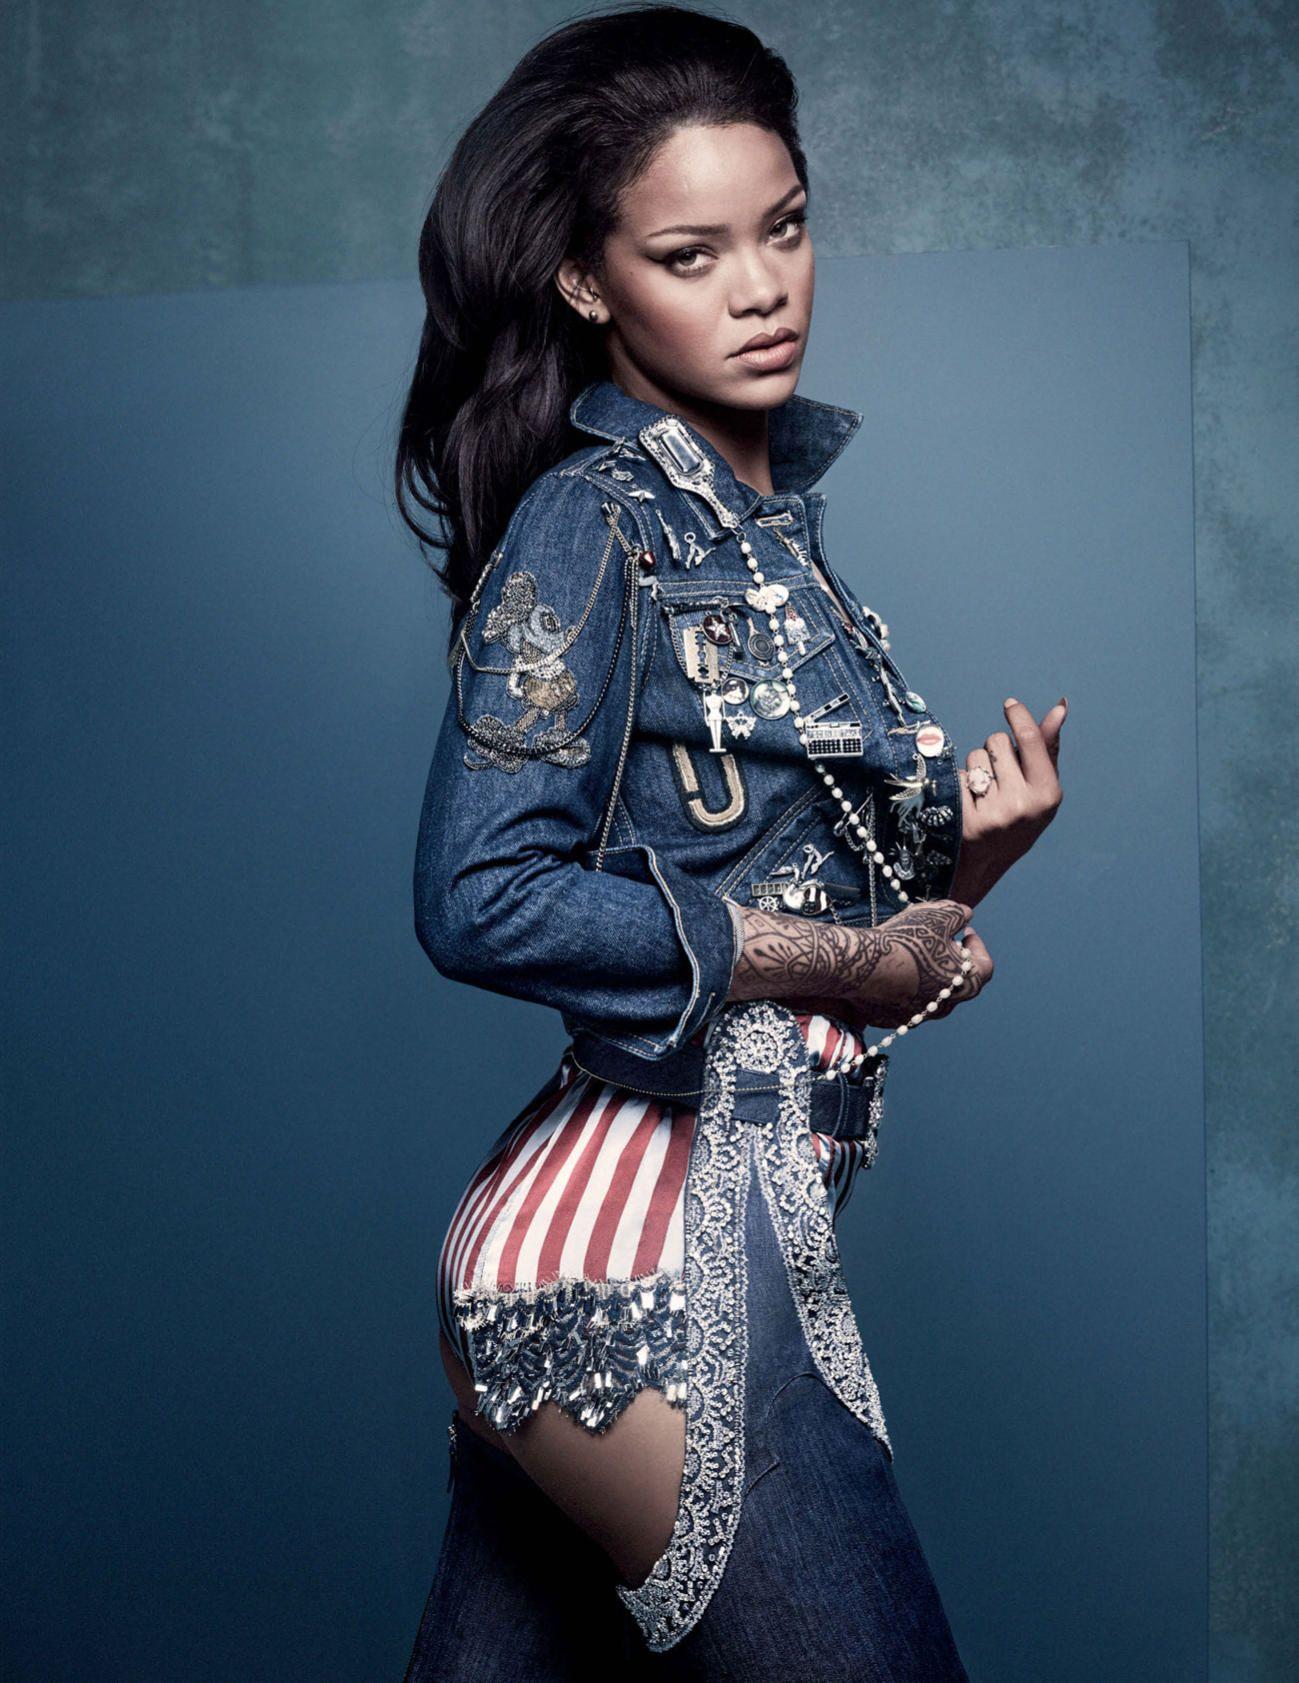 Rihanna 2019 Wallpapers Top Free Rihanna 2019 Backgrounds Wallpaperaccess